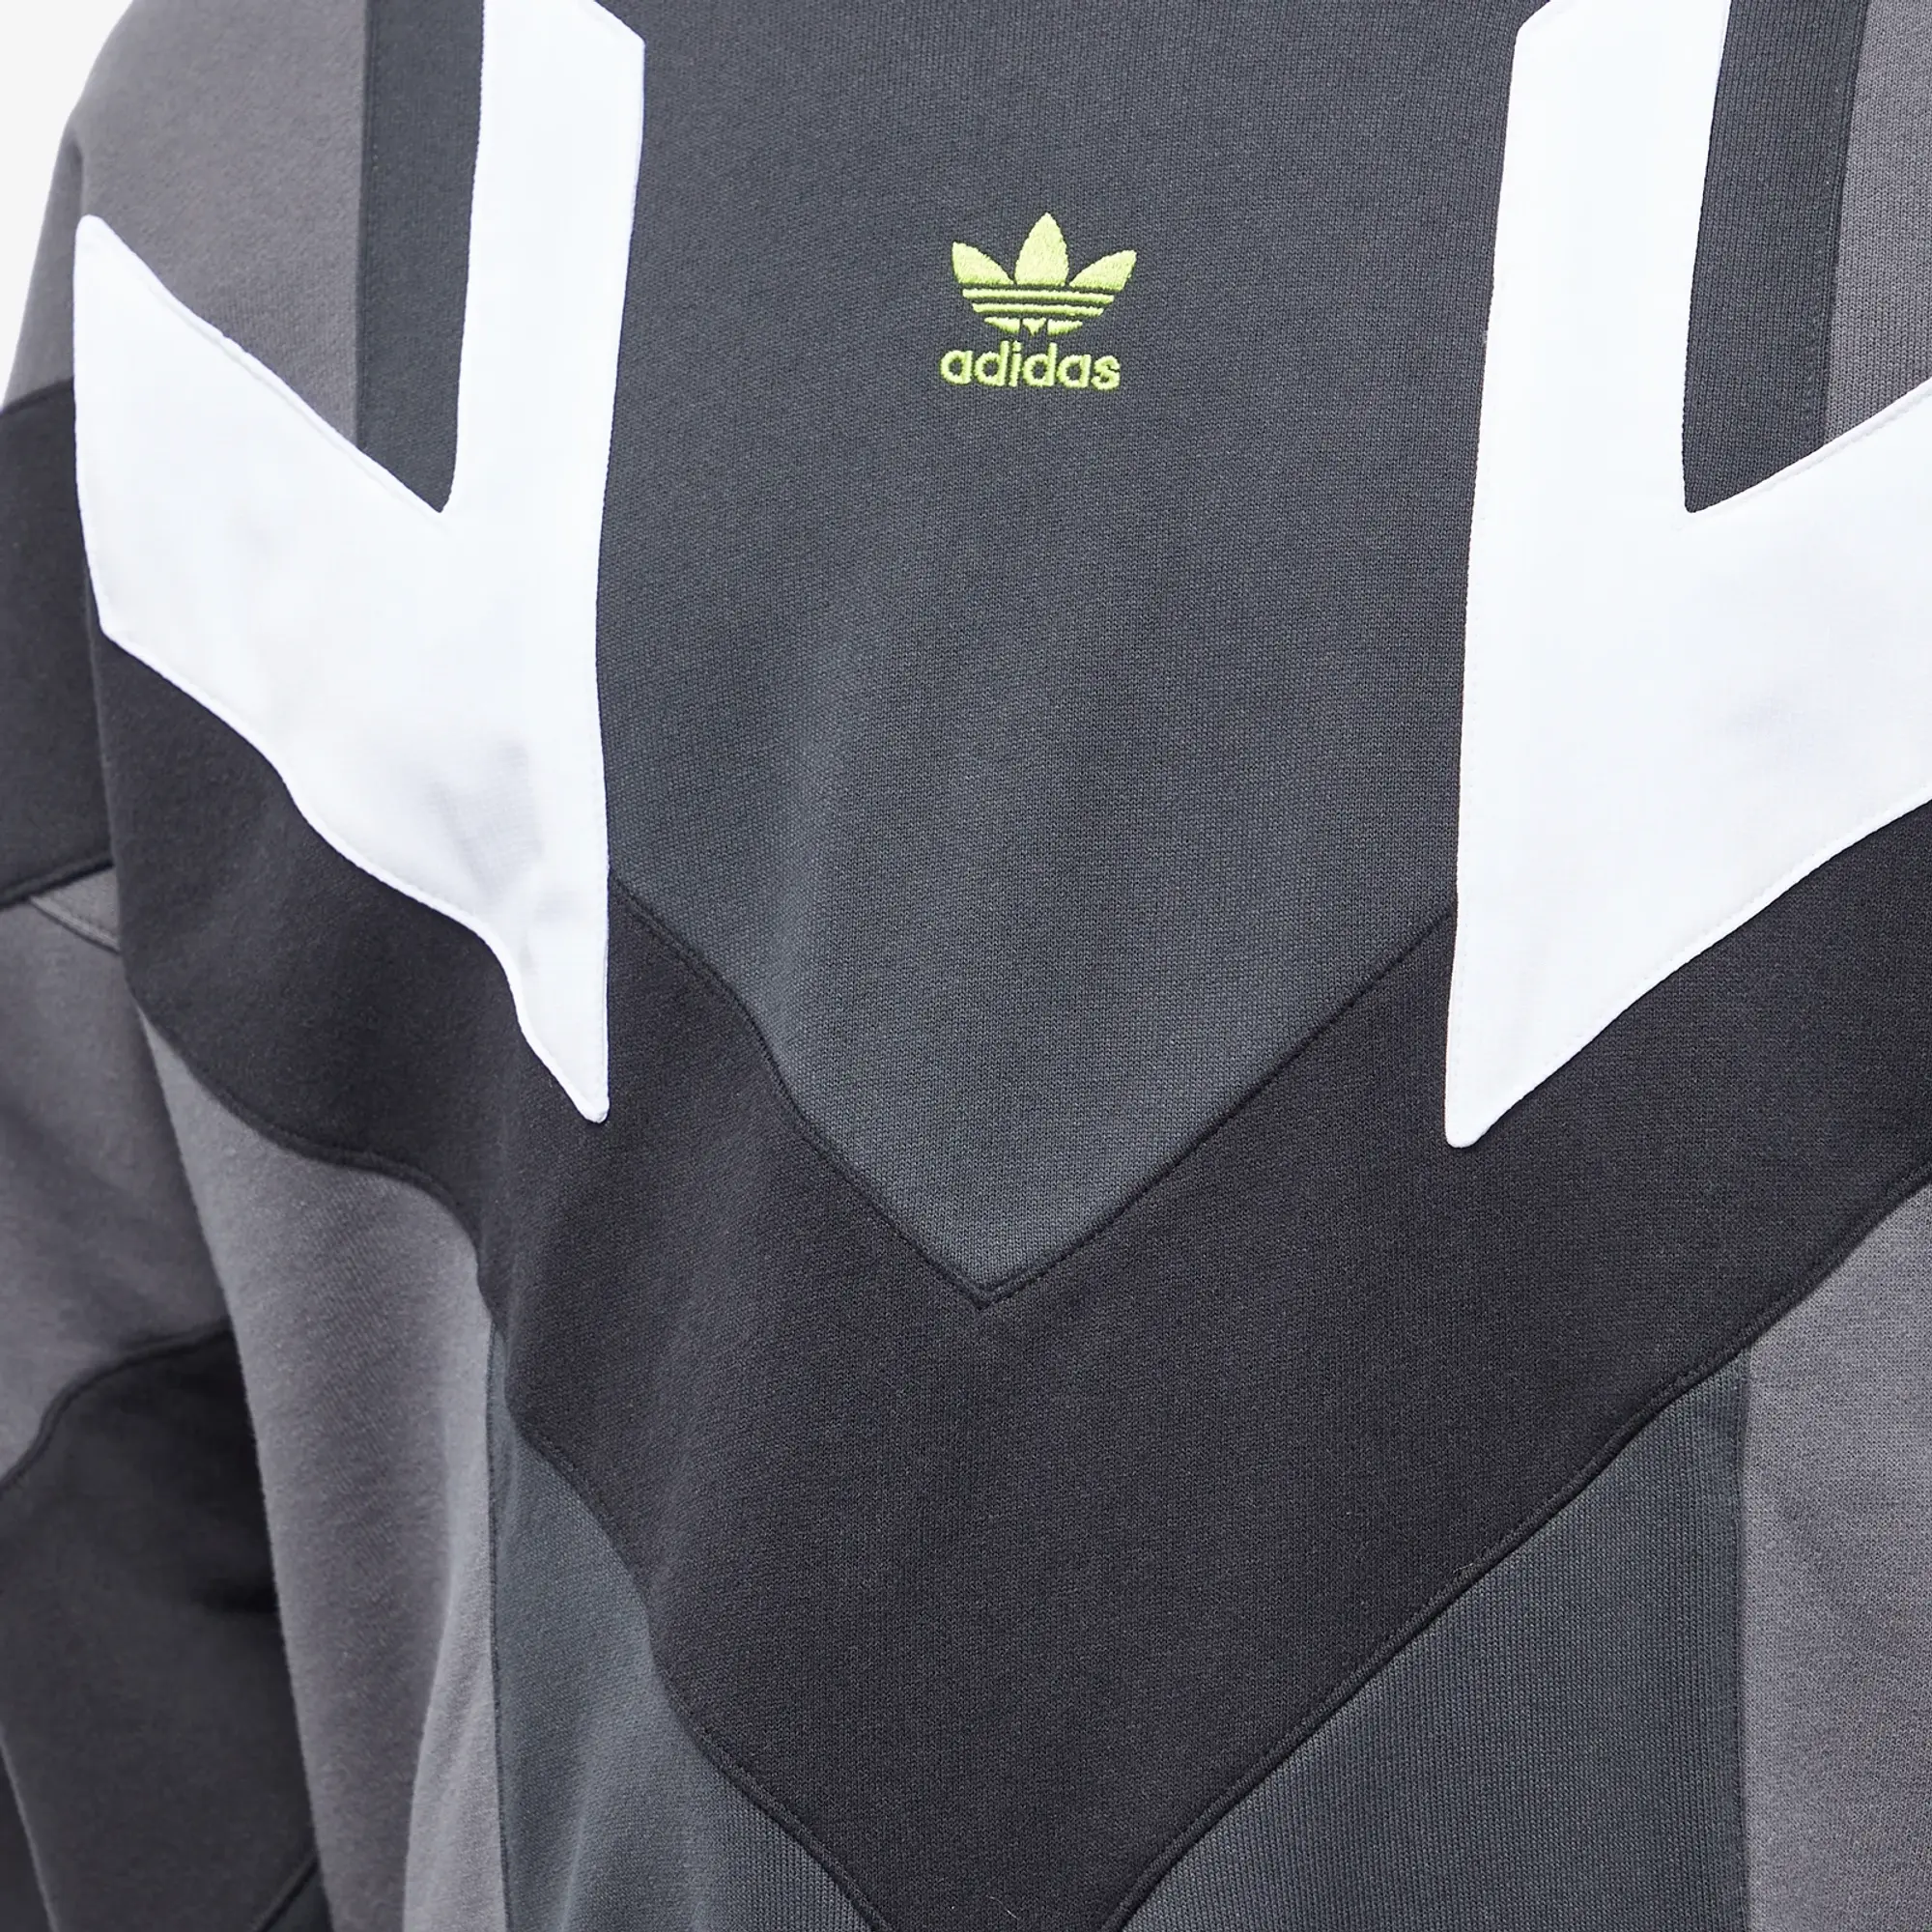 adidas Originals Adidas Men's Rekive Crew Sweat Carbon/Grey Five